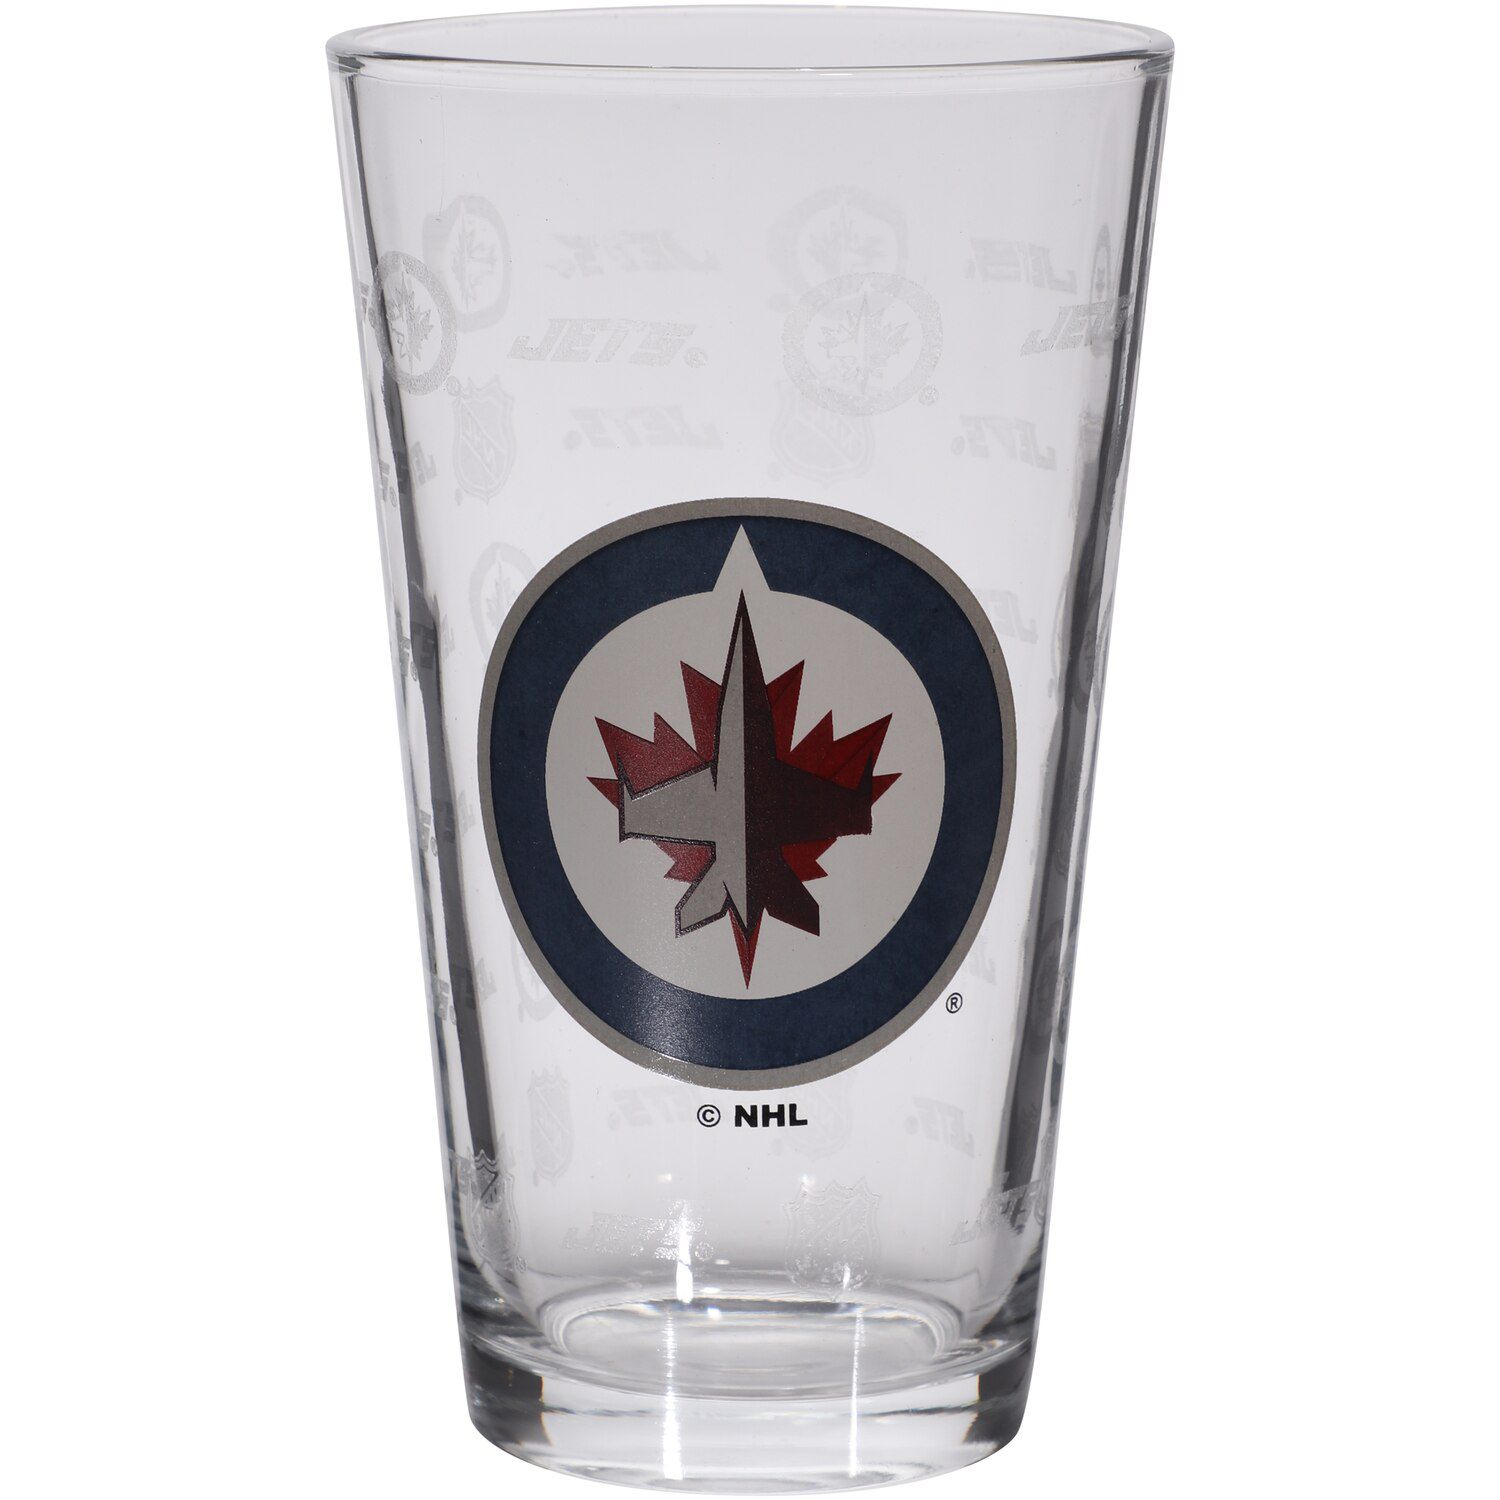 Image for Unbranded Winnipeg Jets 16oz. Sandblasted Mixing Glass at Kohl's.